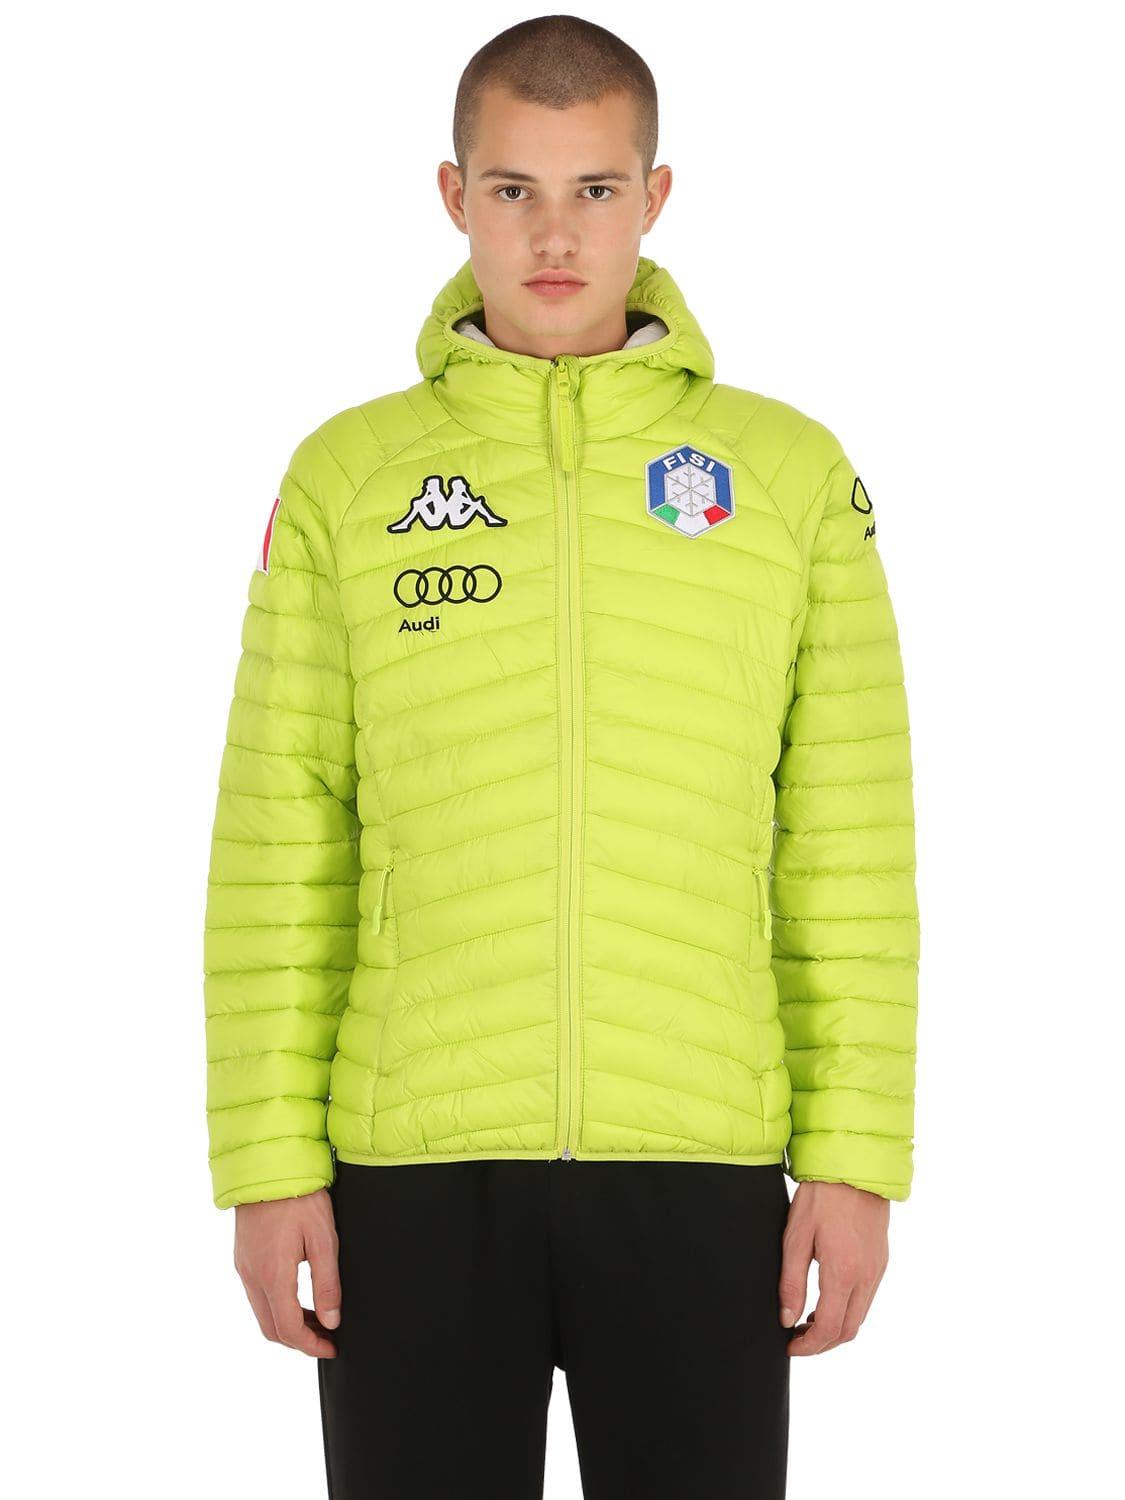 Kappa Fisi Italian Ski Team Primaloft Jacket in Green Lime (Green) for ...